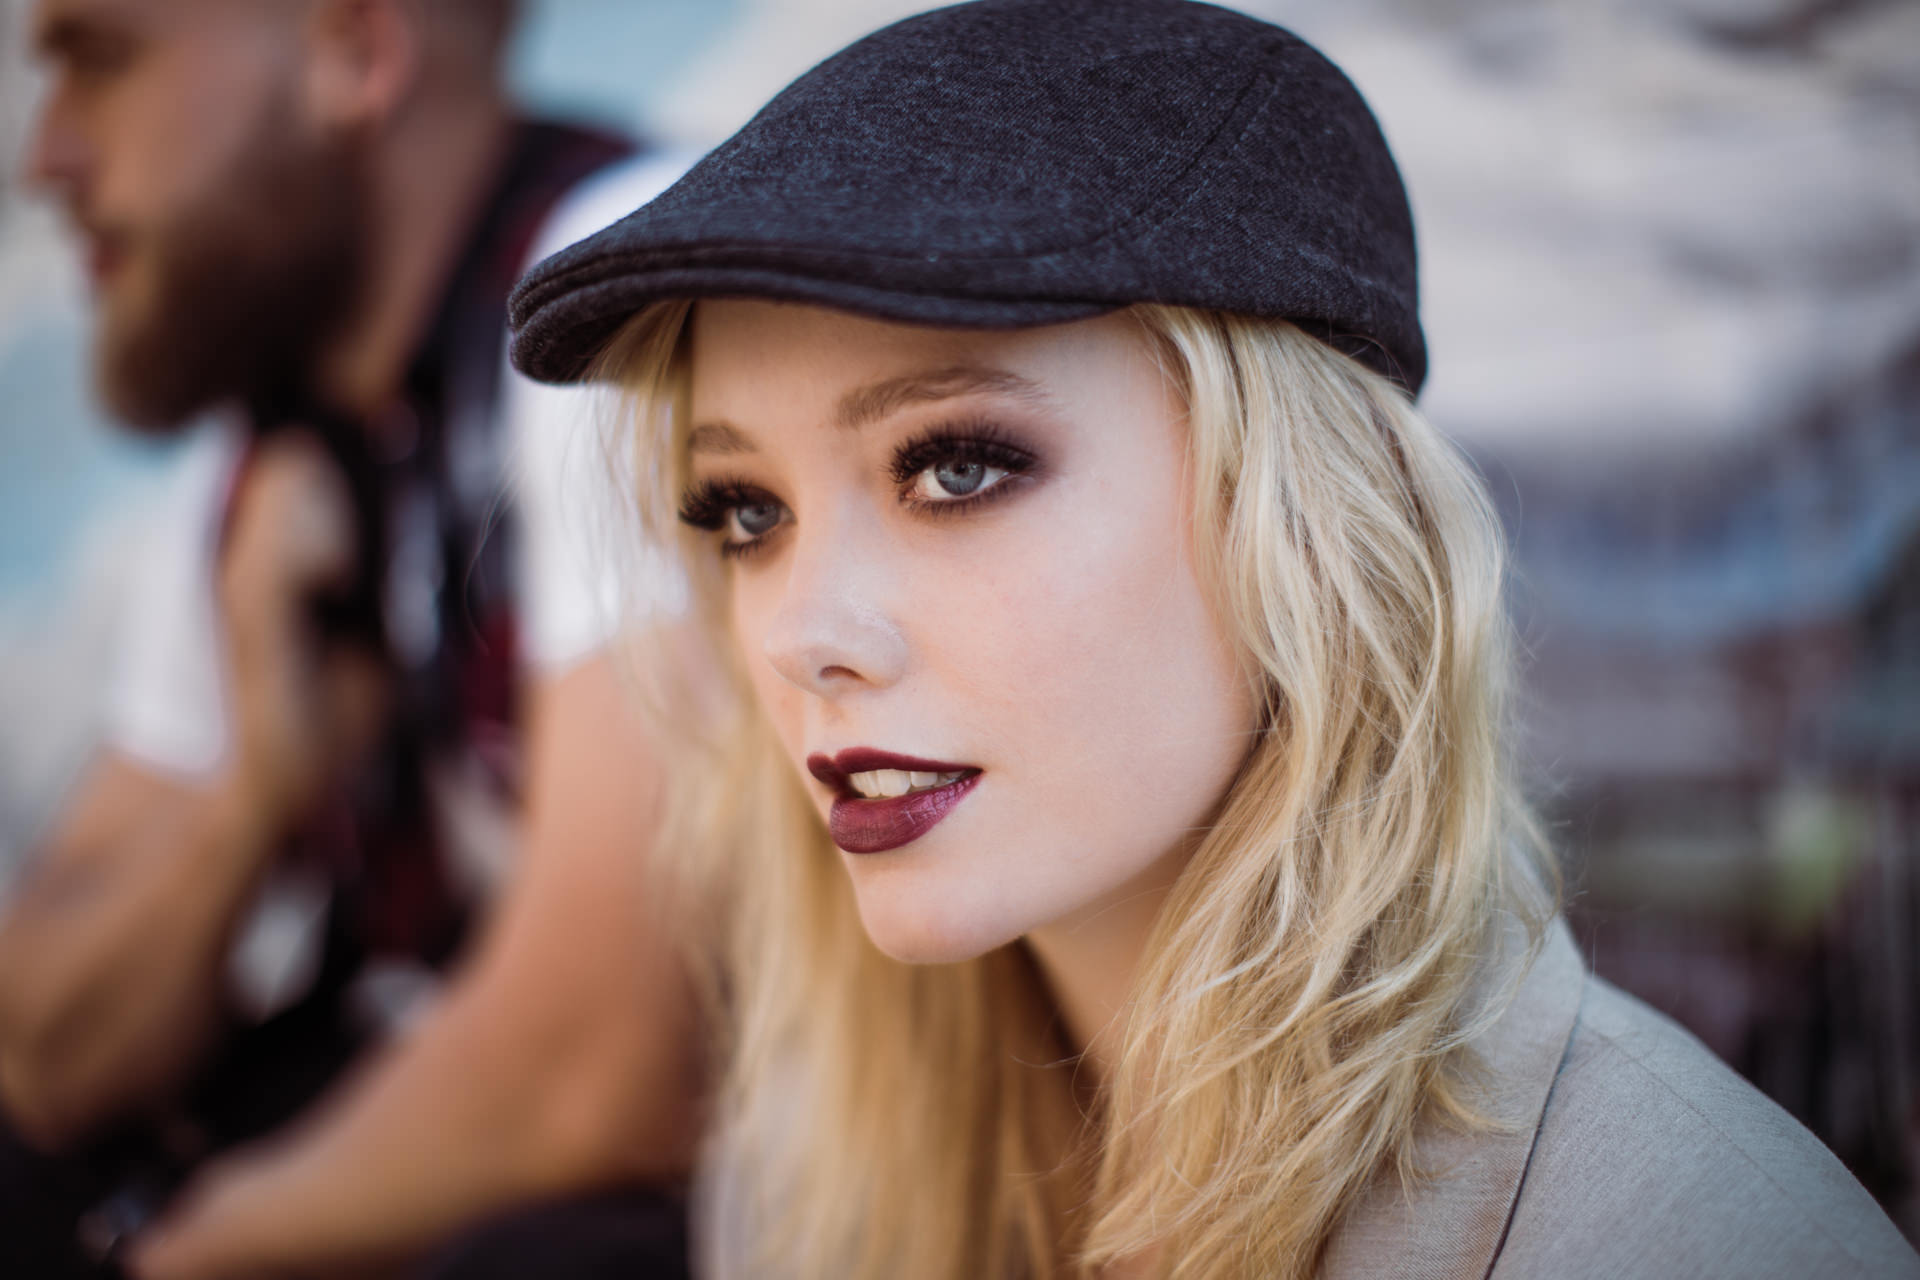 portrait - beret cap with girl - blonde hair - commercial photo